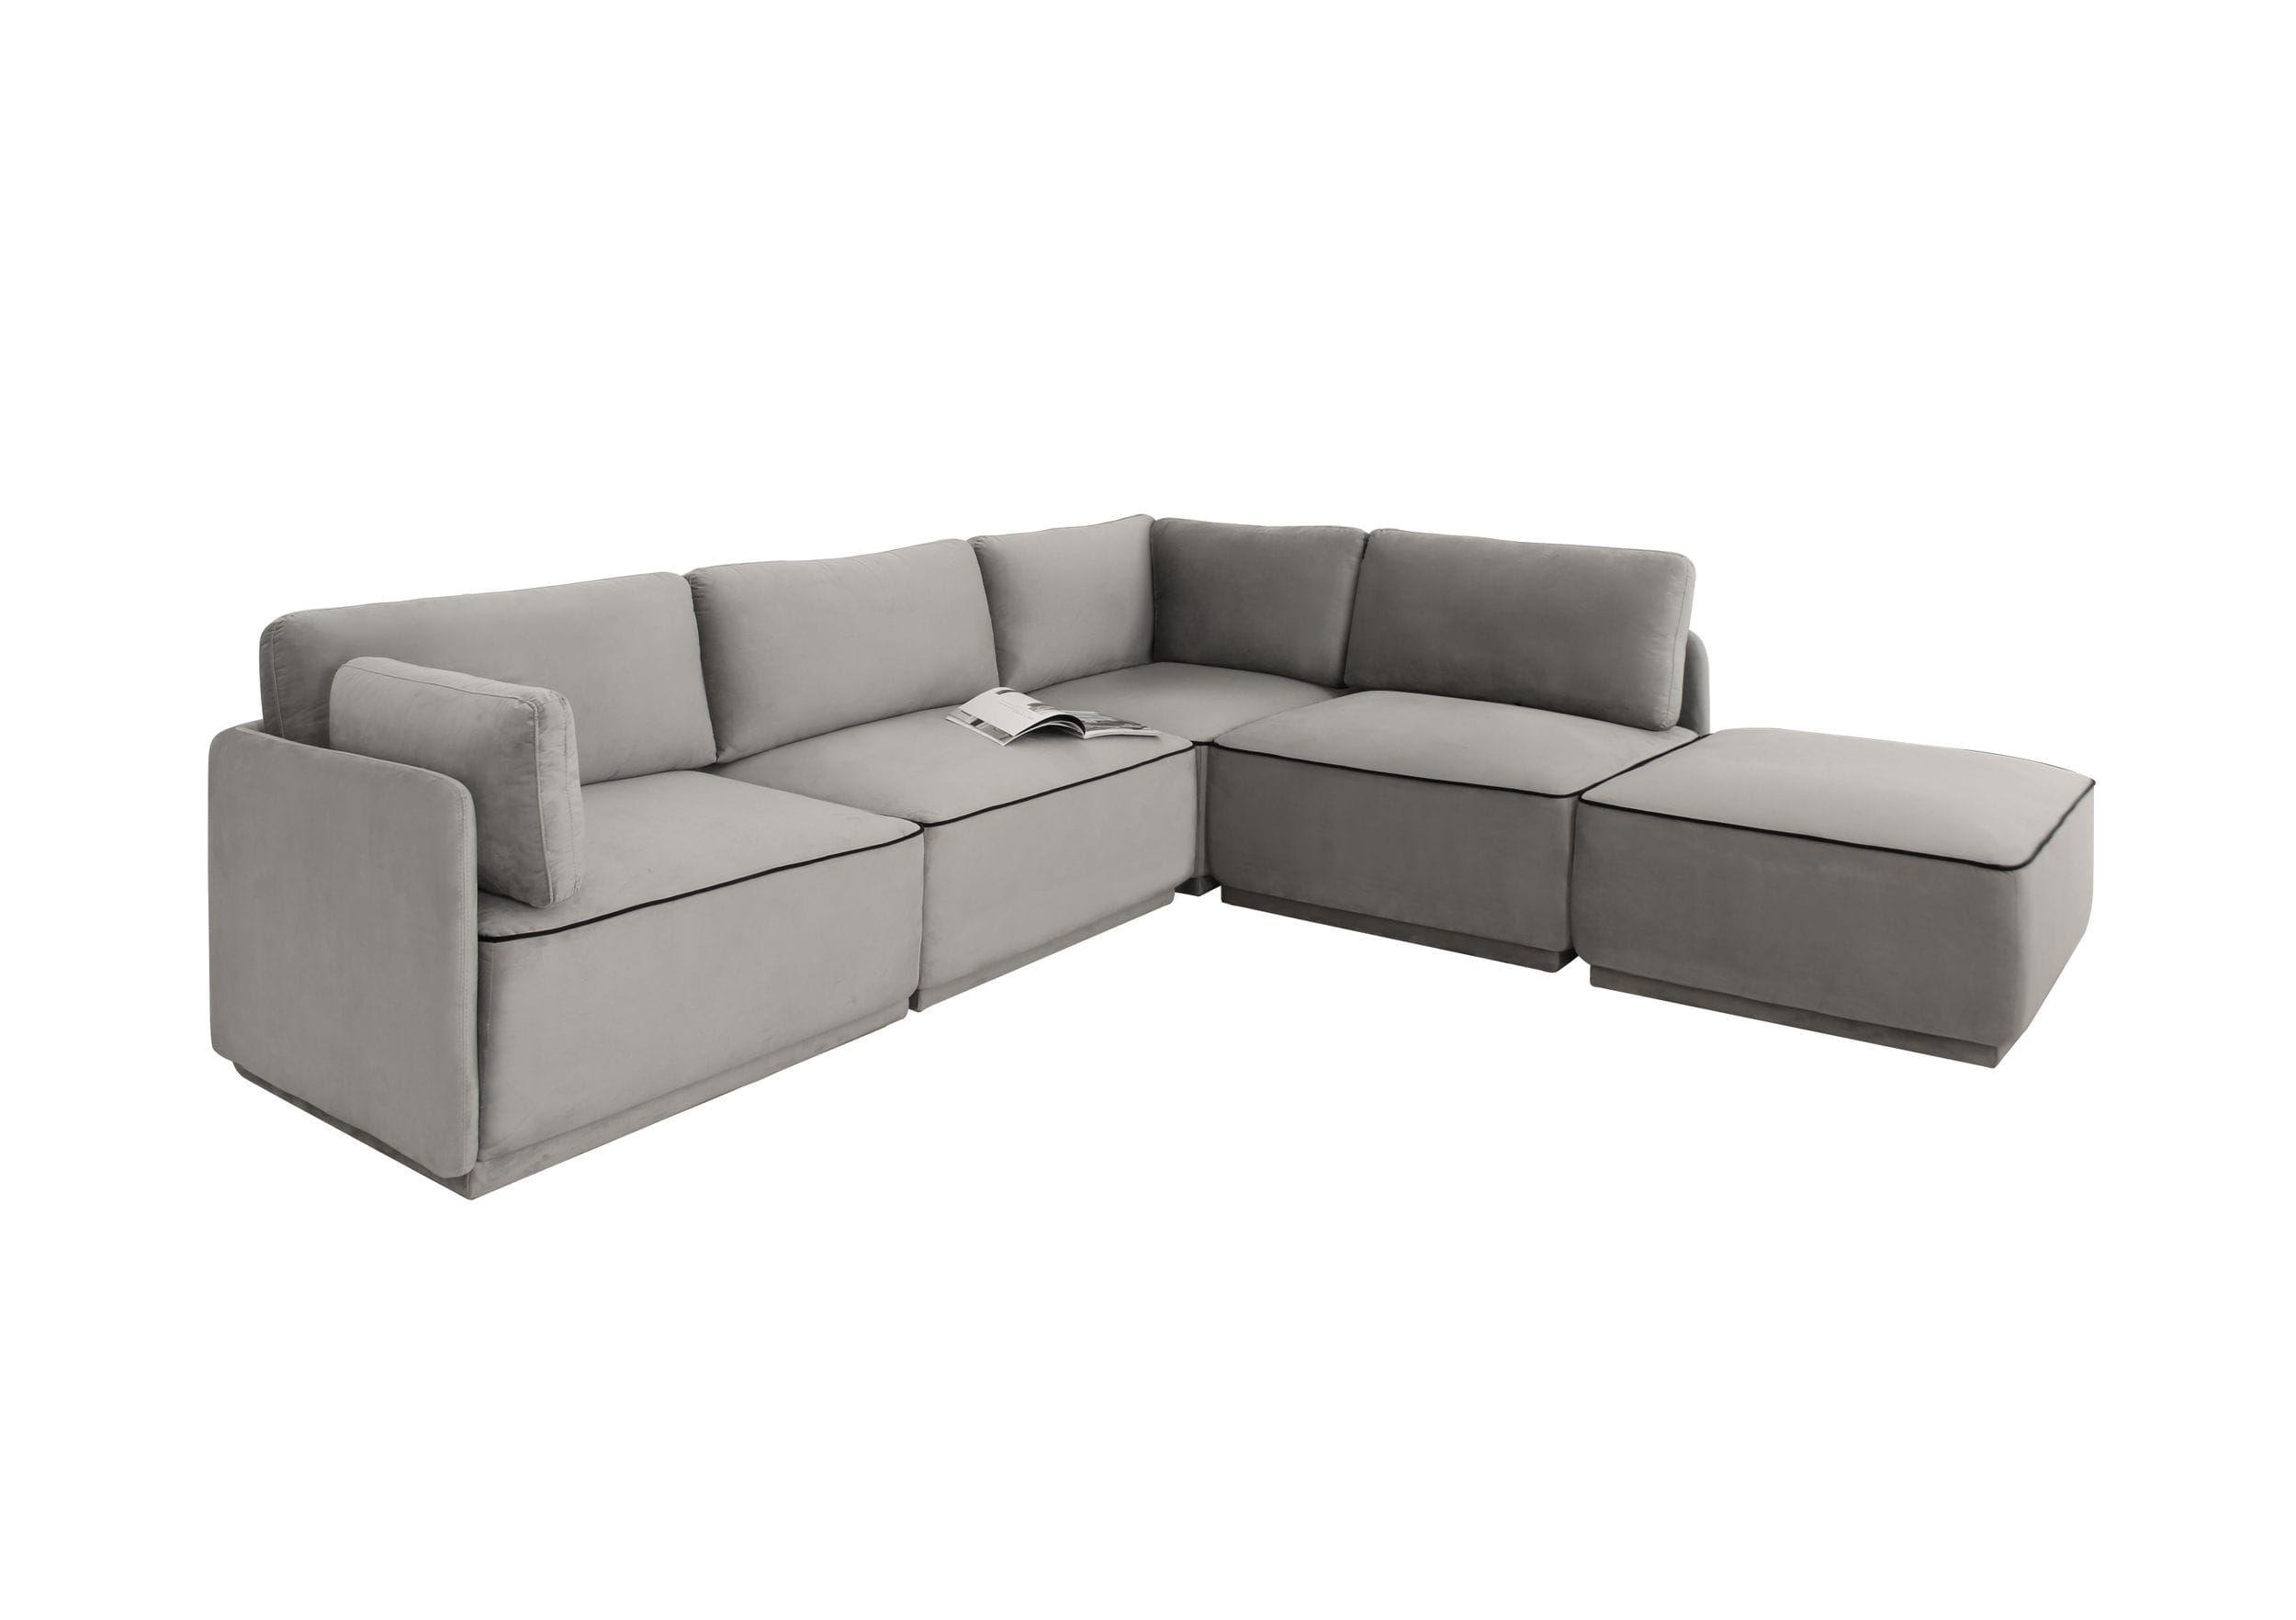 Contemporary, Modern Sectional Sofa VGKNK8596-GRY-SECT VGKNK8596-GRY-SECT in Gray Velvet